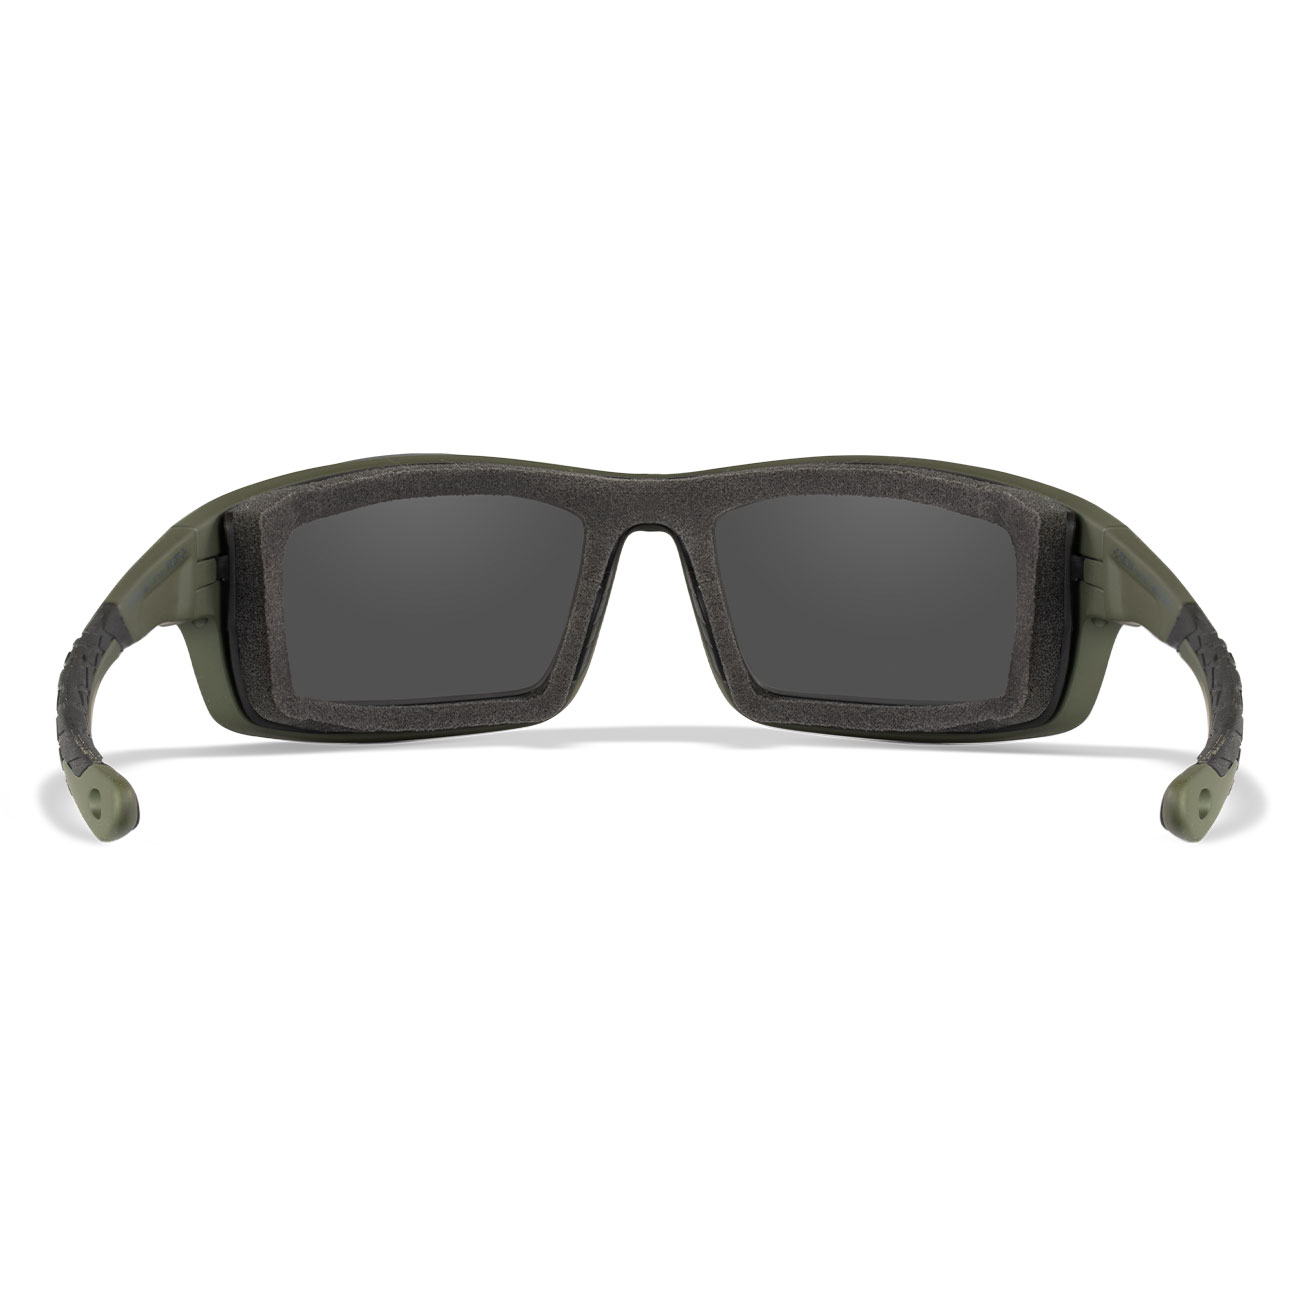 Wiley X Sonnenbrille Grid Captivate matt oliv Glser grau inkl. Brillenetui und Facial Cavity Dichtung Bild 3